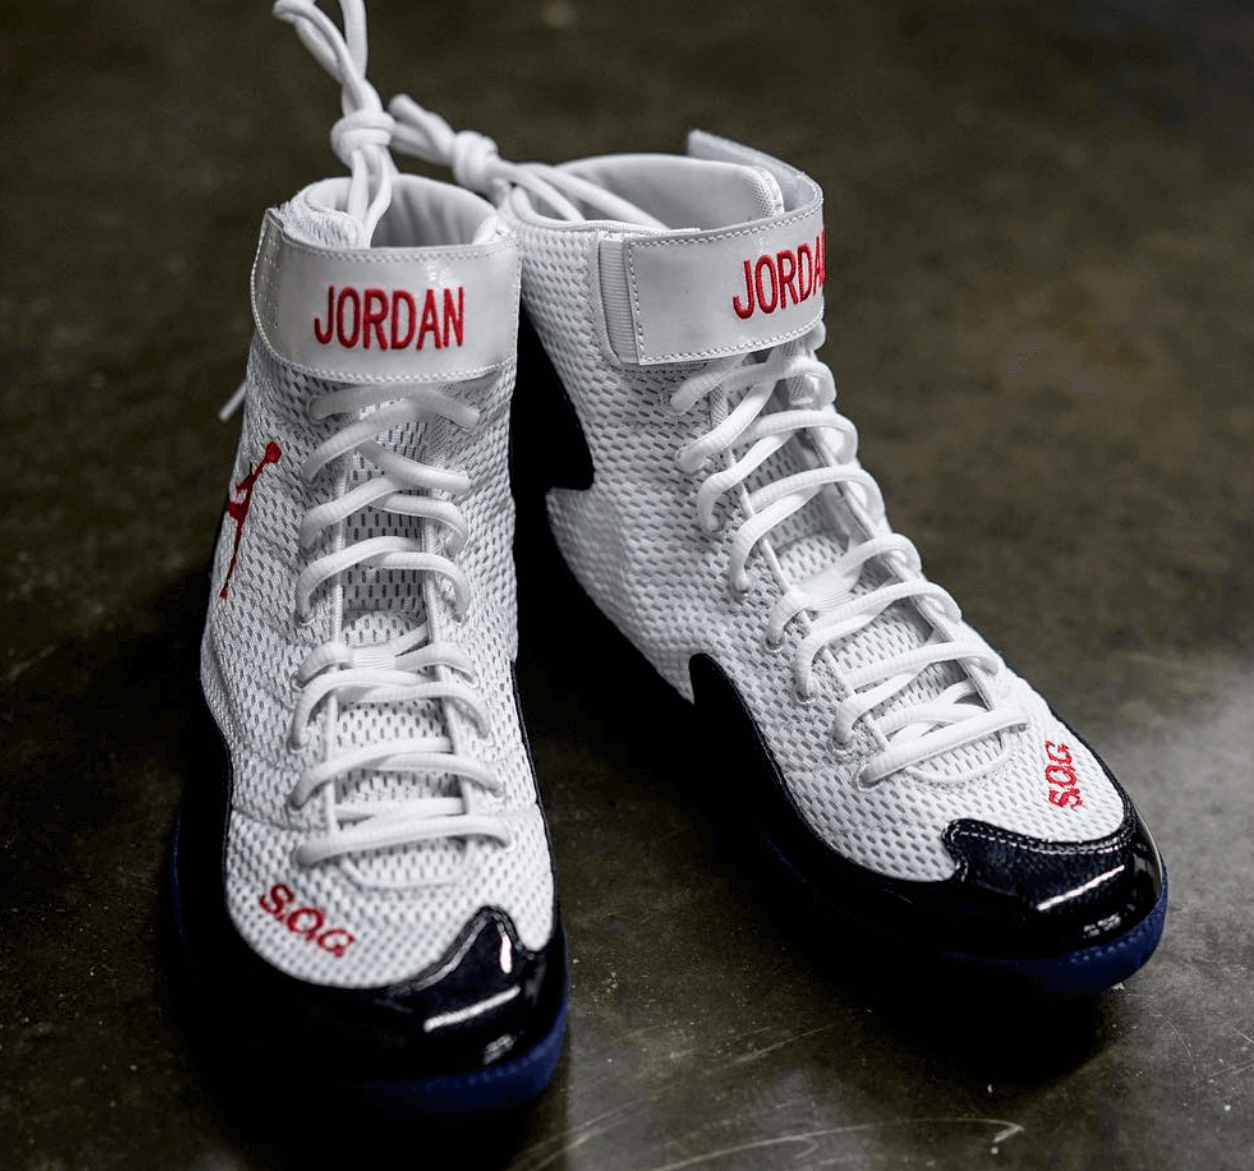 Andre Talks Jordan Brand Deal & The Contender Kicks